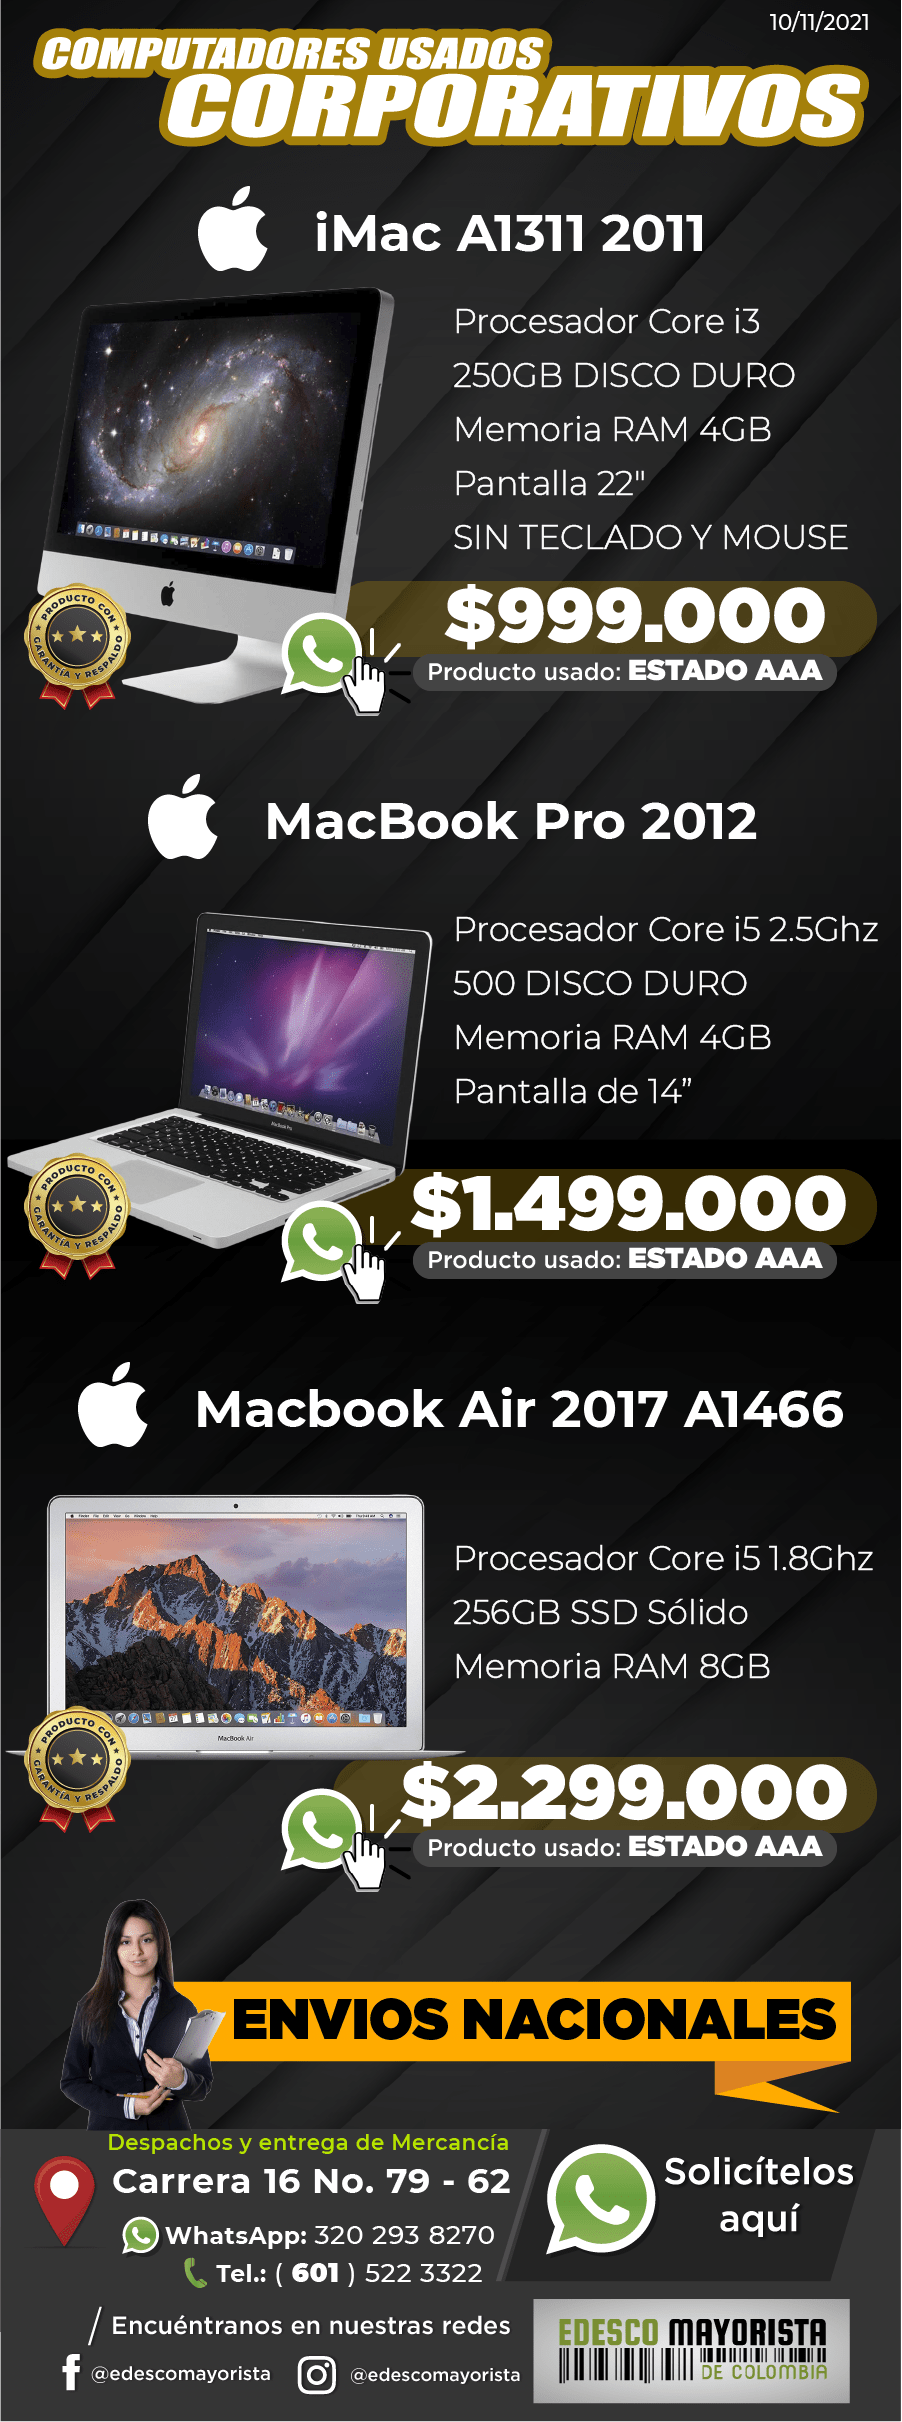 iMac 2011 - Macbook Pro 2012 - Macbook Air 2017